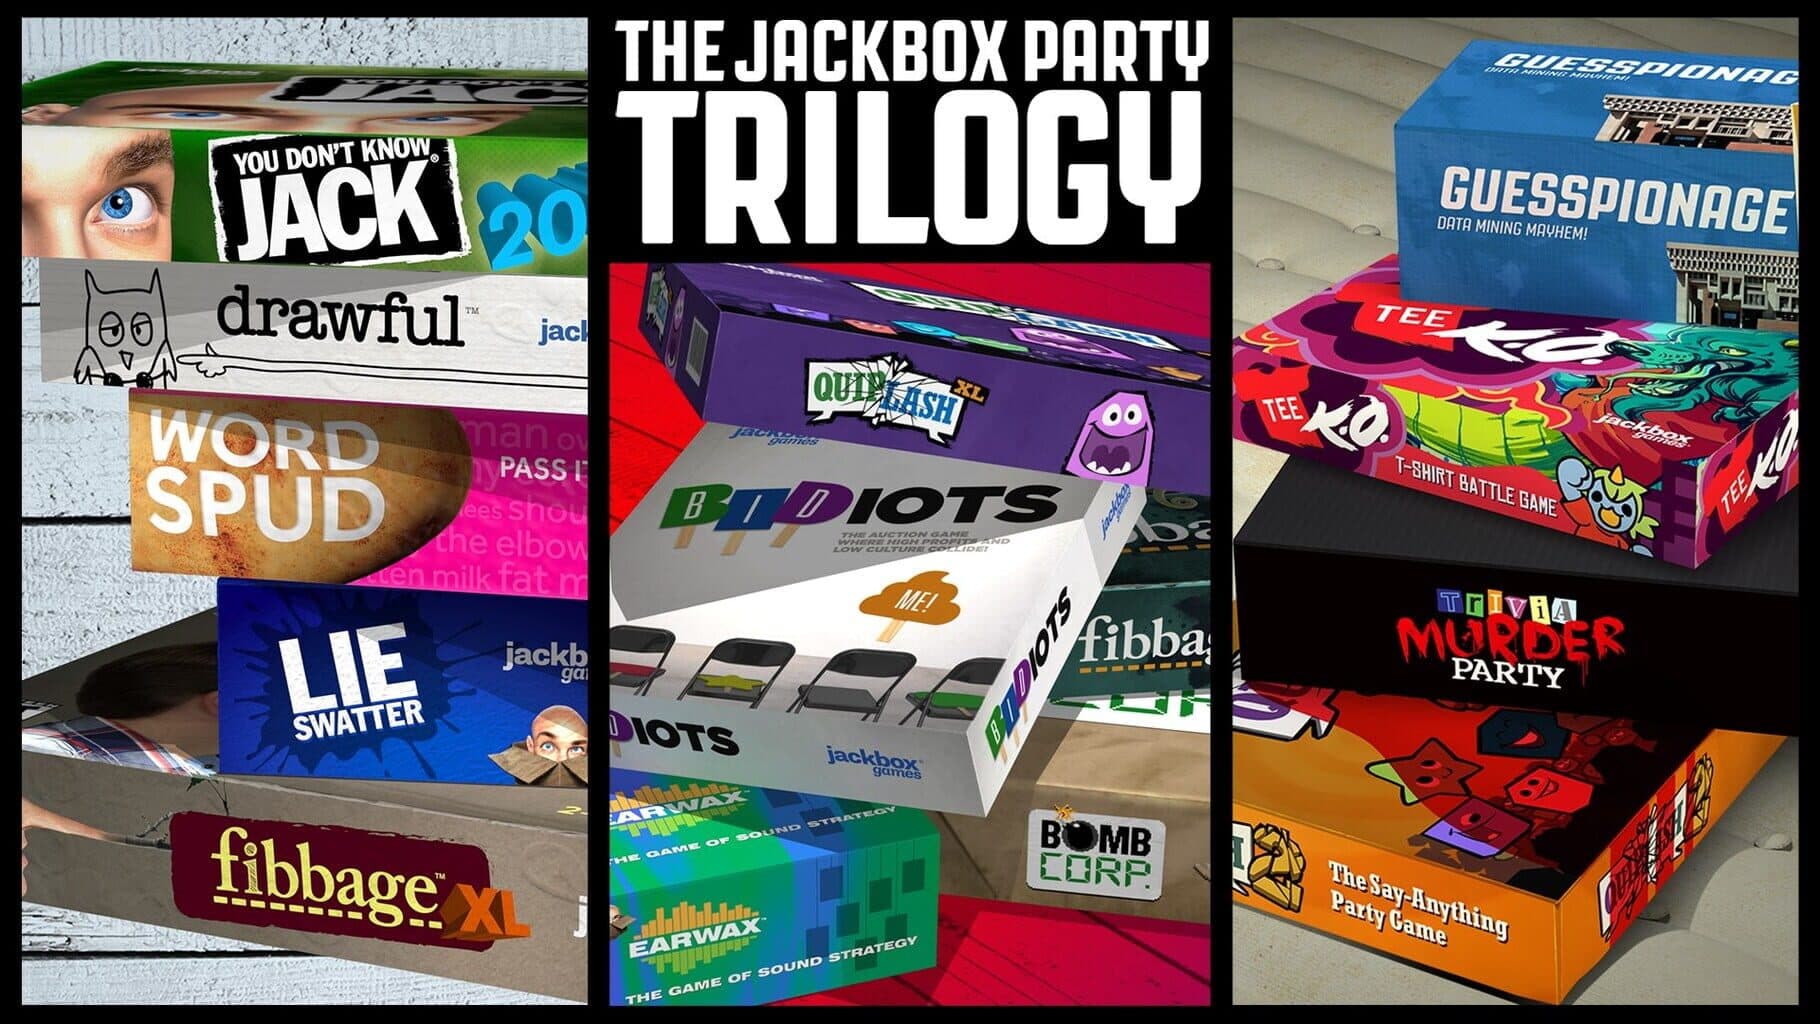 The Jackbox Party Trilogy Image